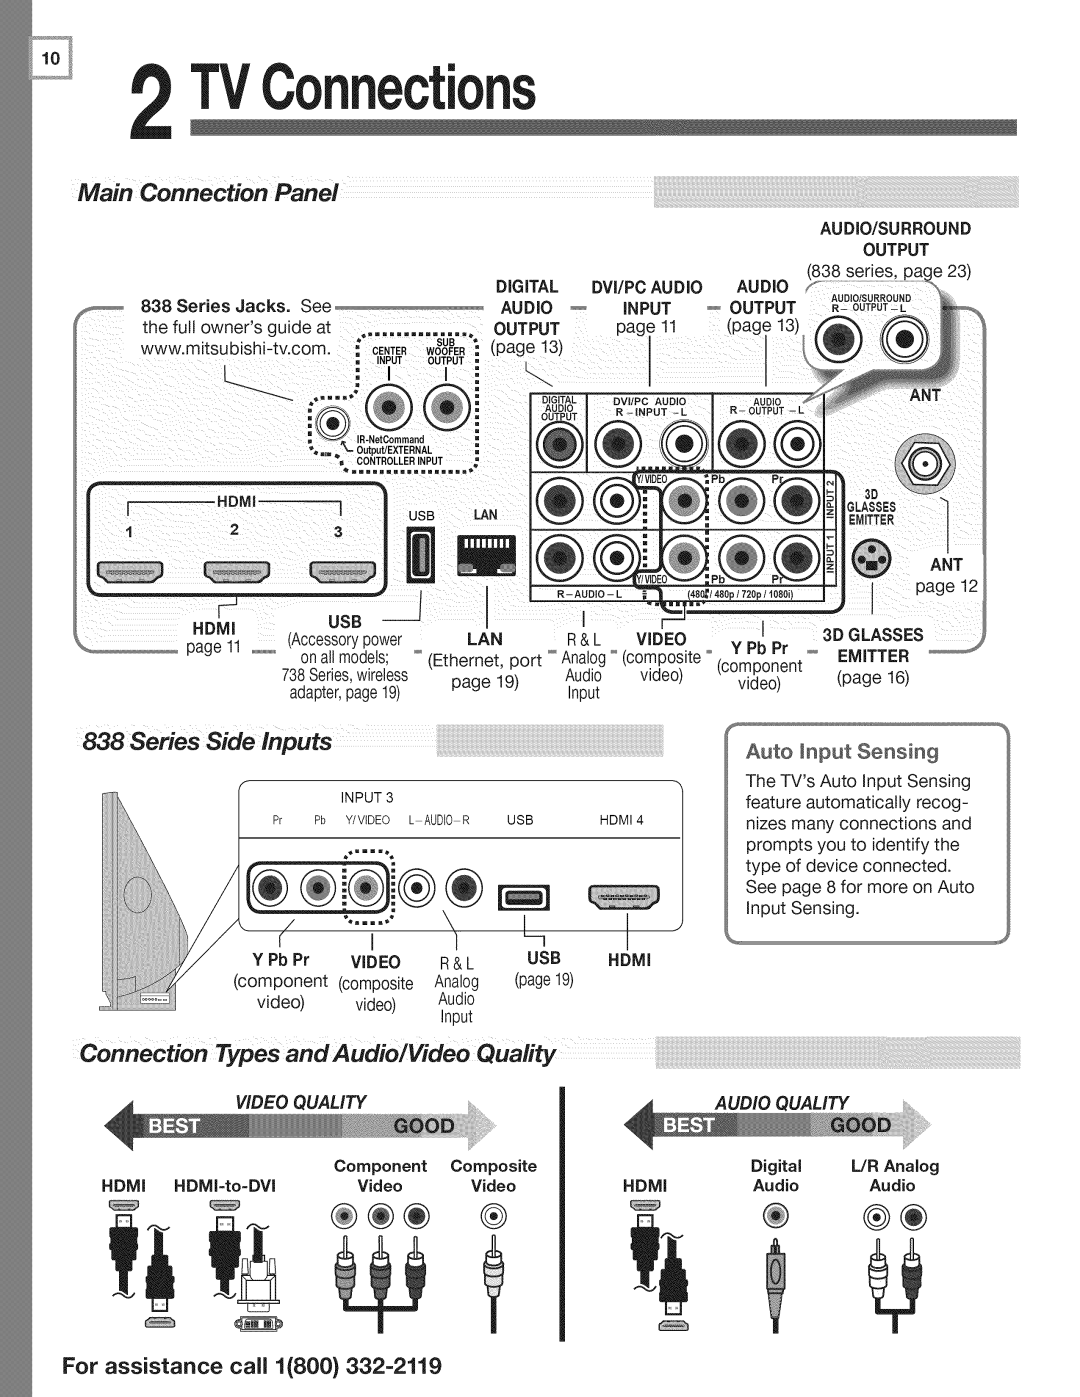 Mitsubishi Electronics 738 connectionTypesandAudio/VideoQuality, Main, Connection, Panel, Series Side, inputs, r___NDMI 